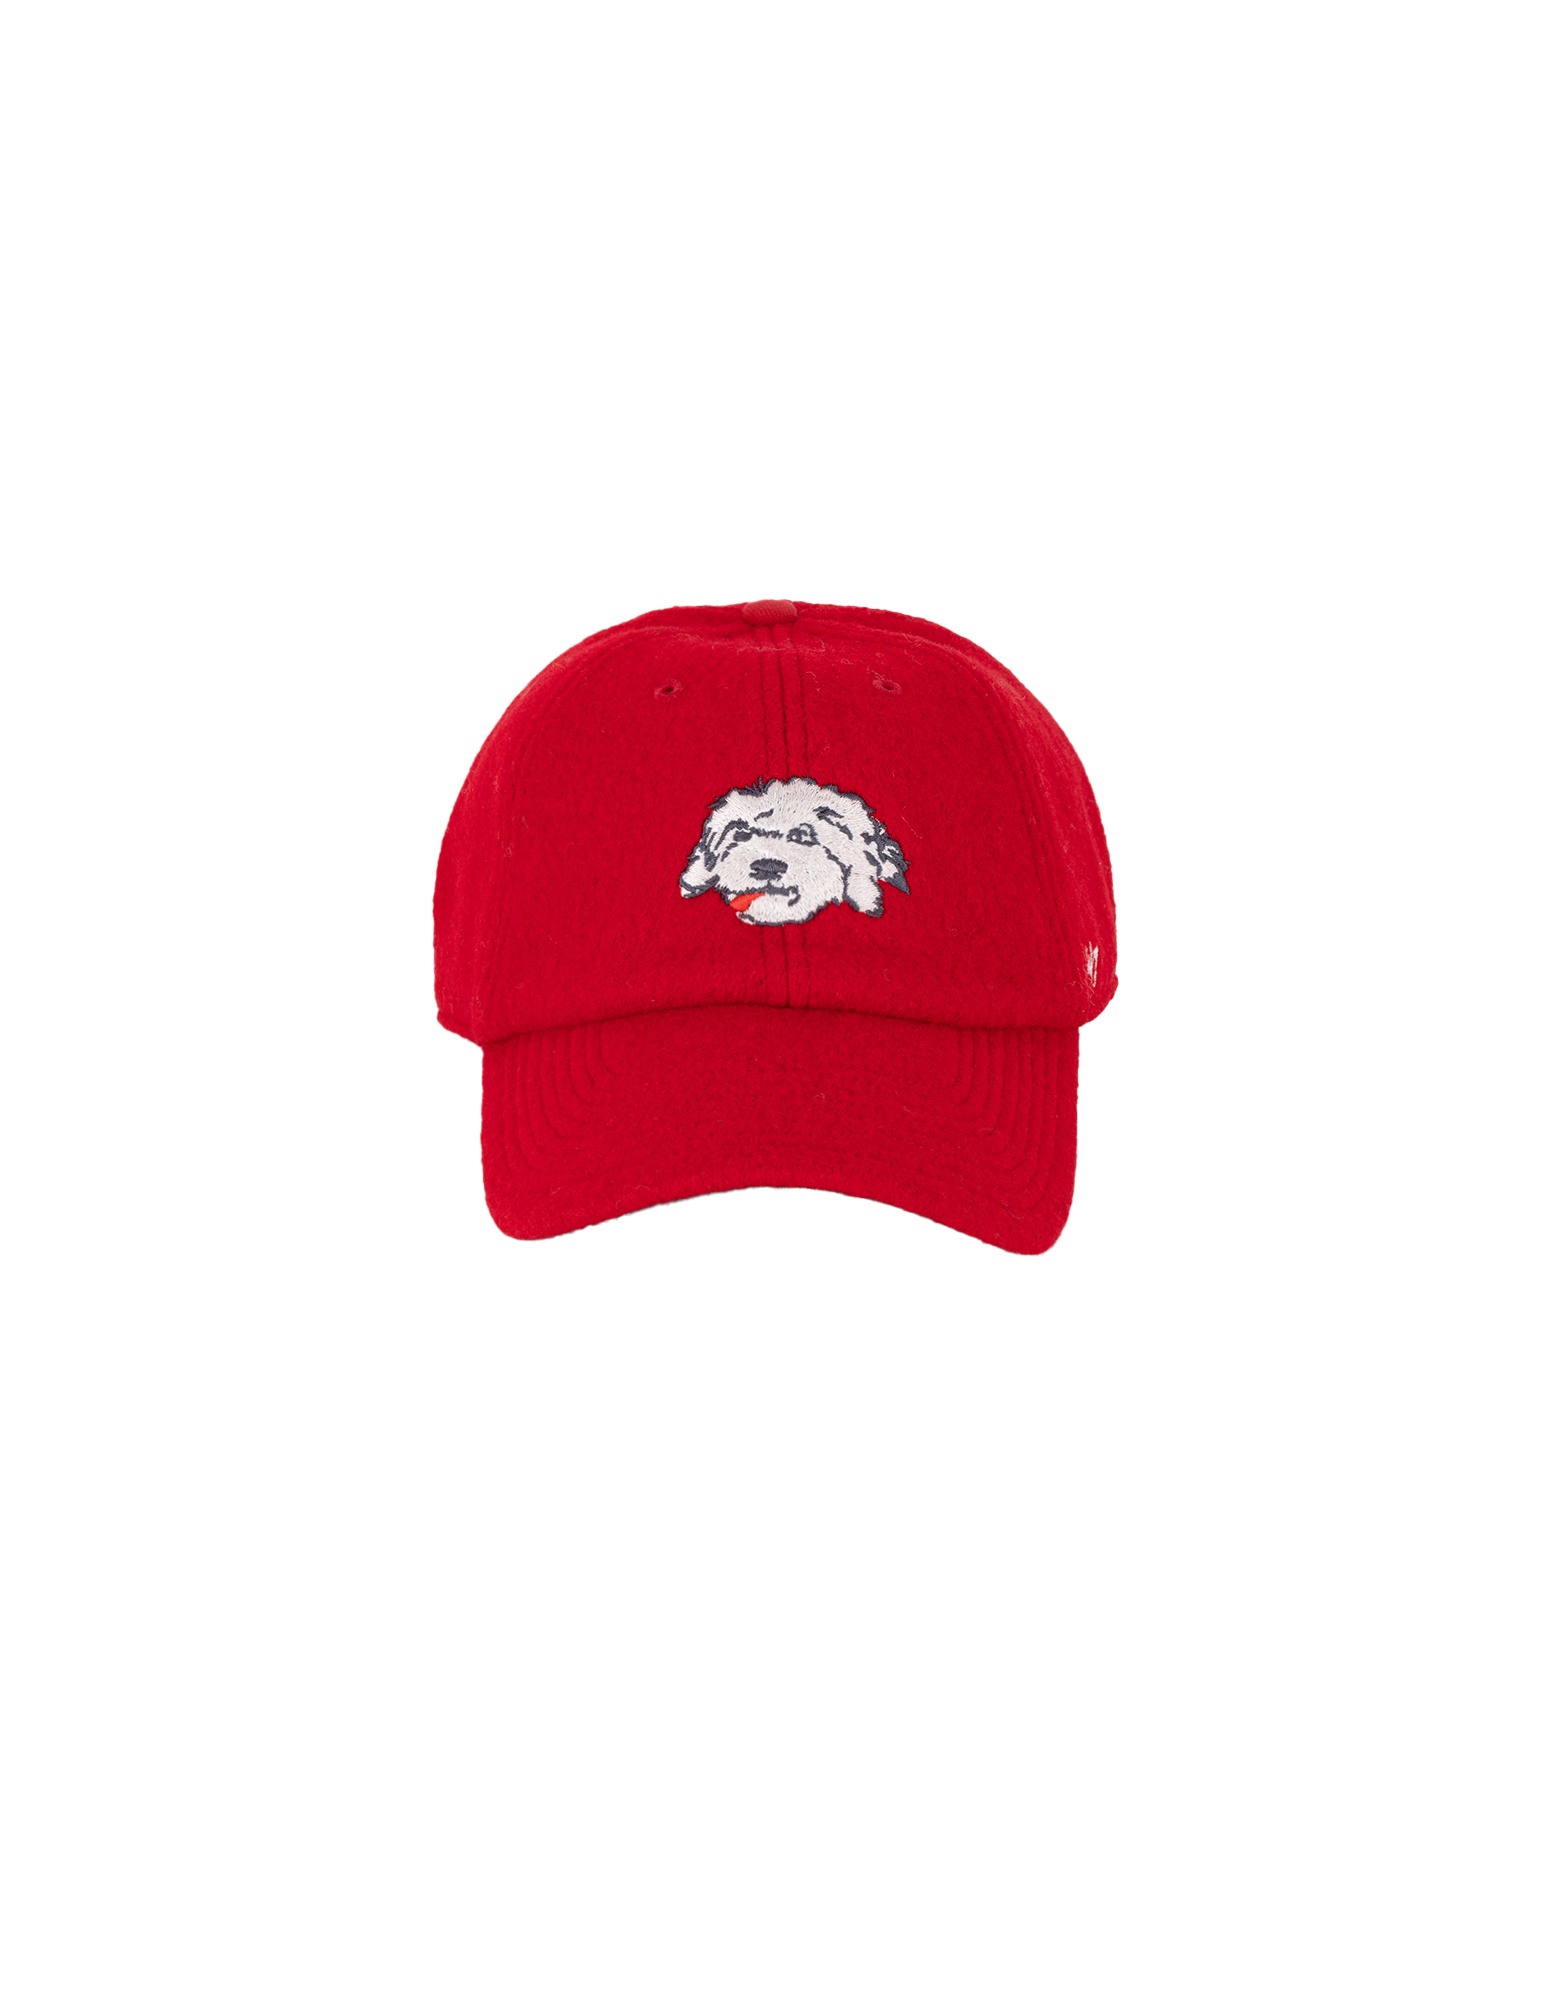 Shaggy Dog Baseball Cap (Red)